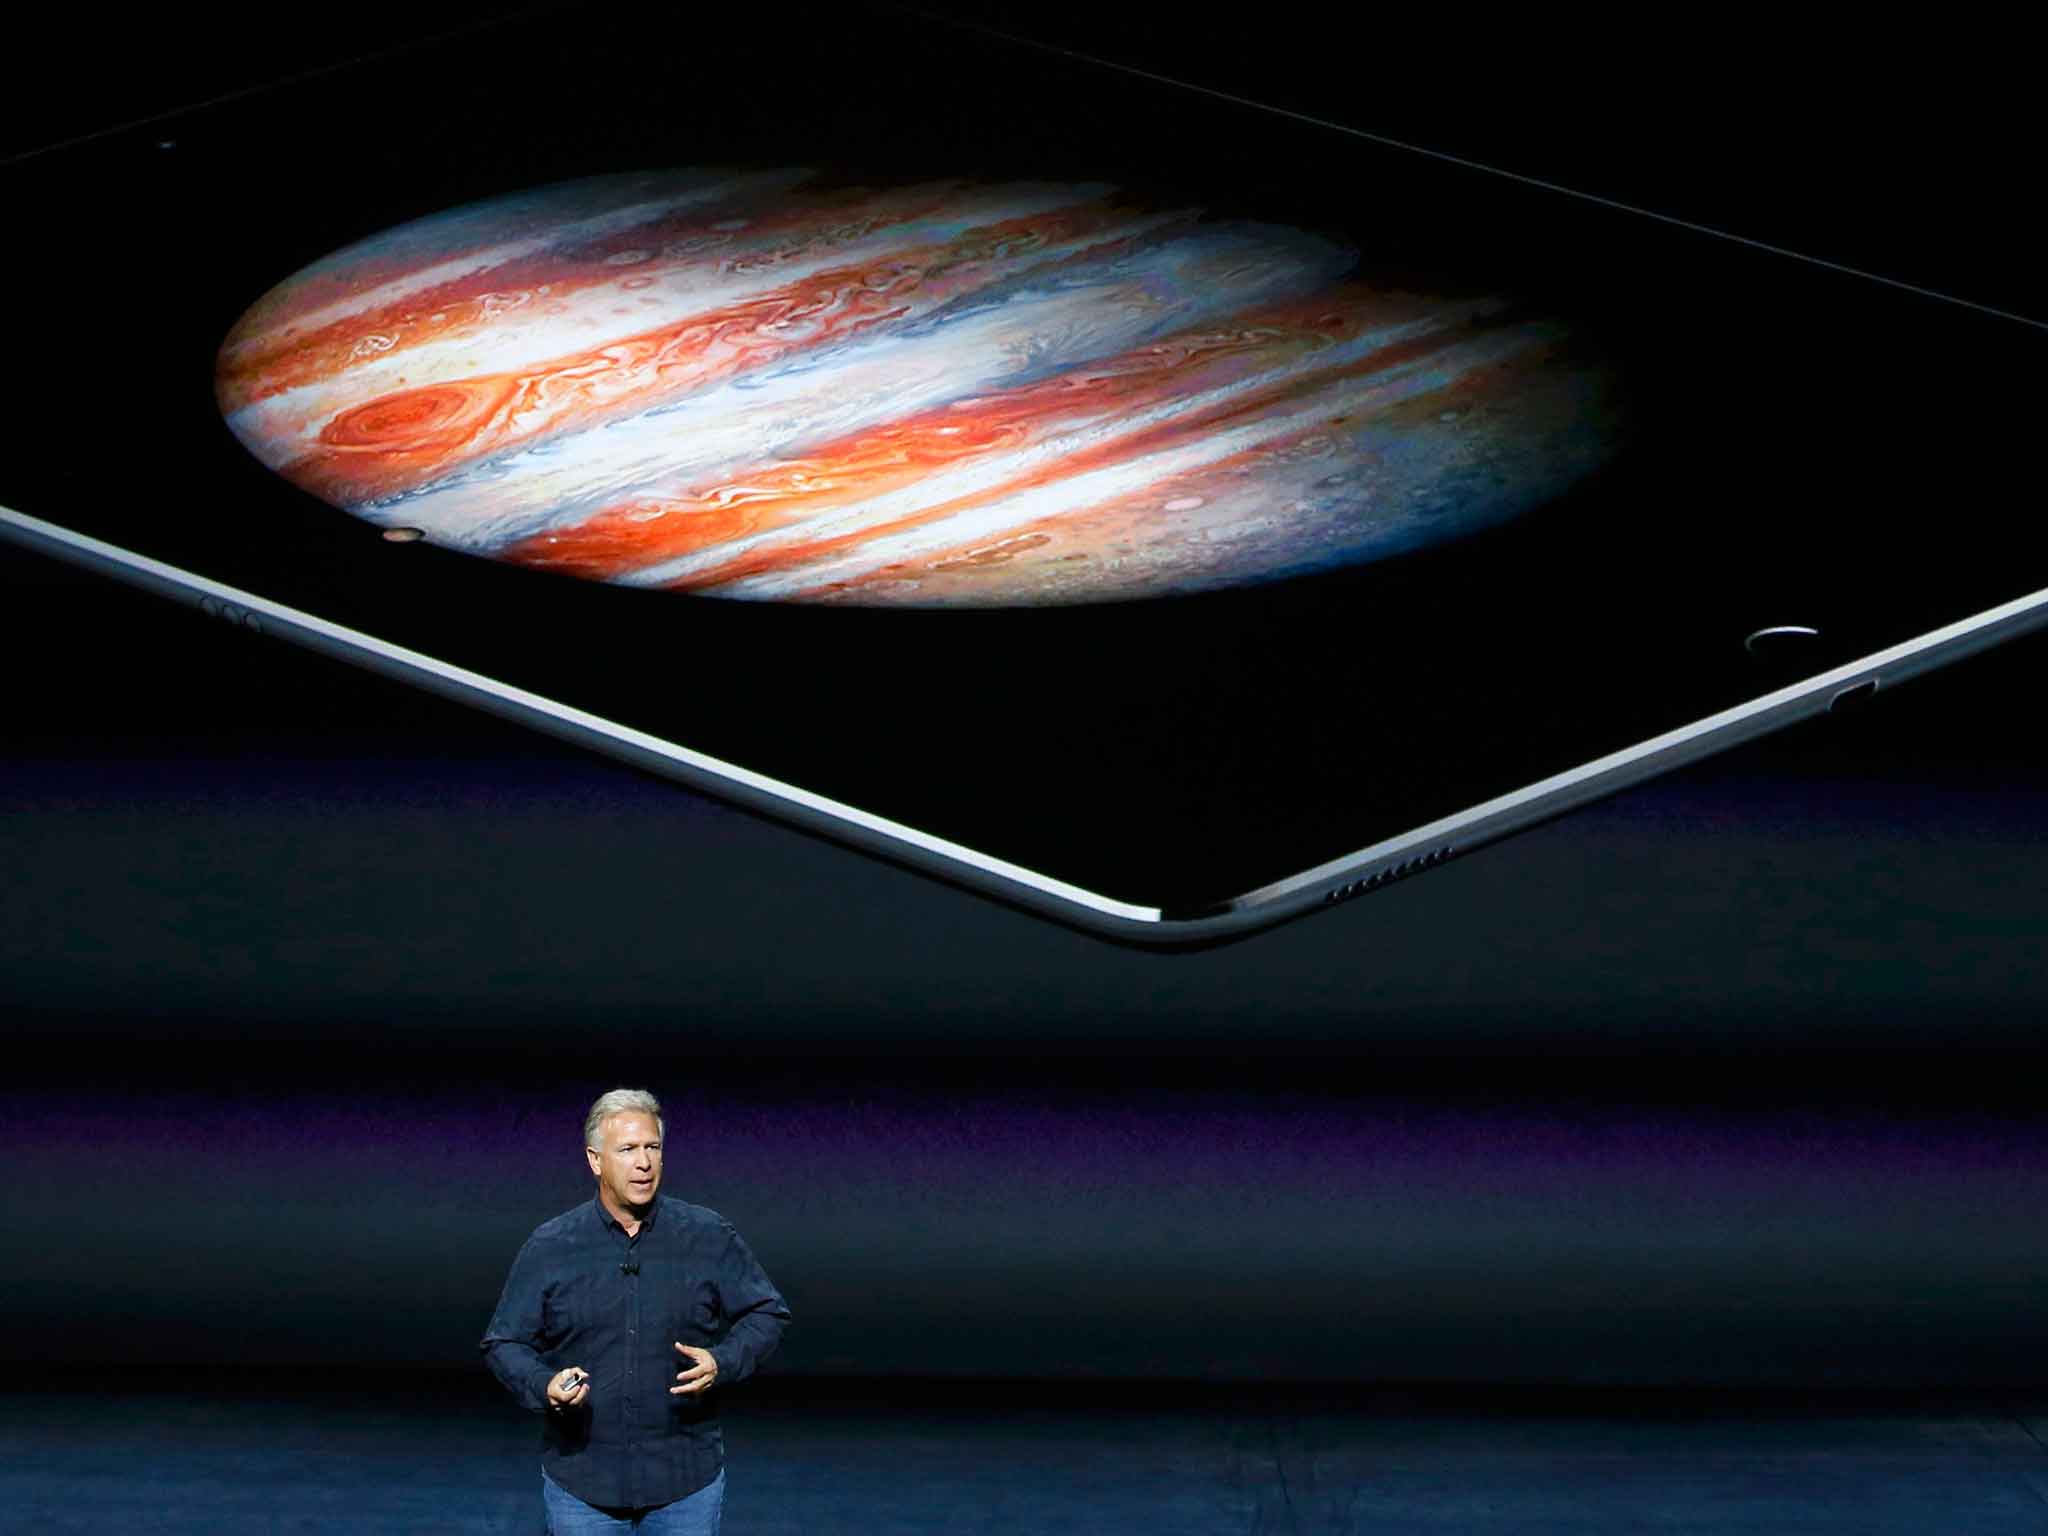 Phil Schiller, Apple's senior vice president of worldwide marketing, discusses the new iPad Pro